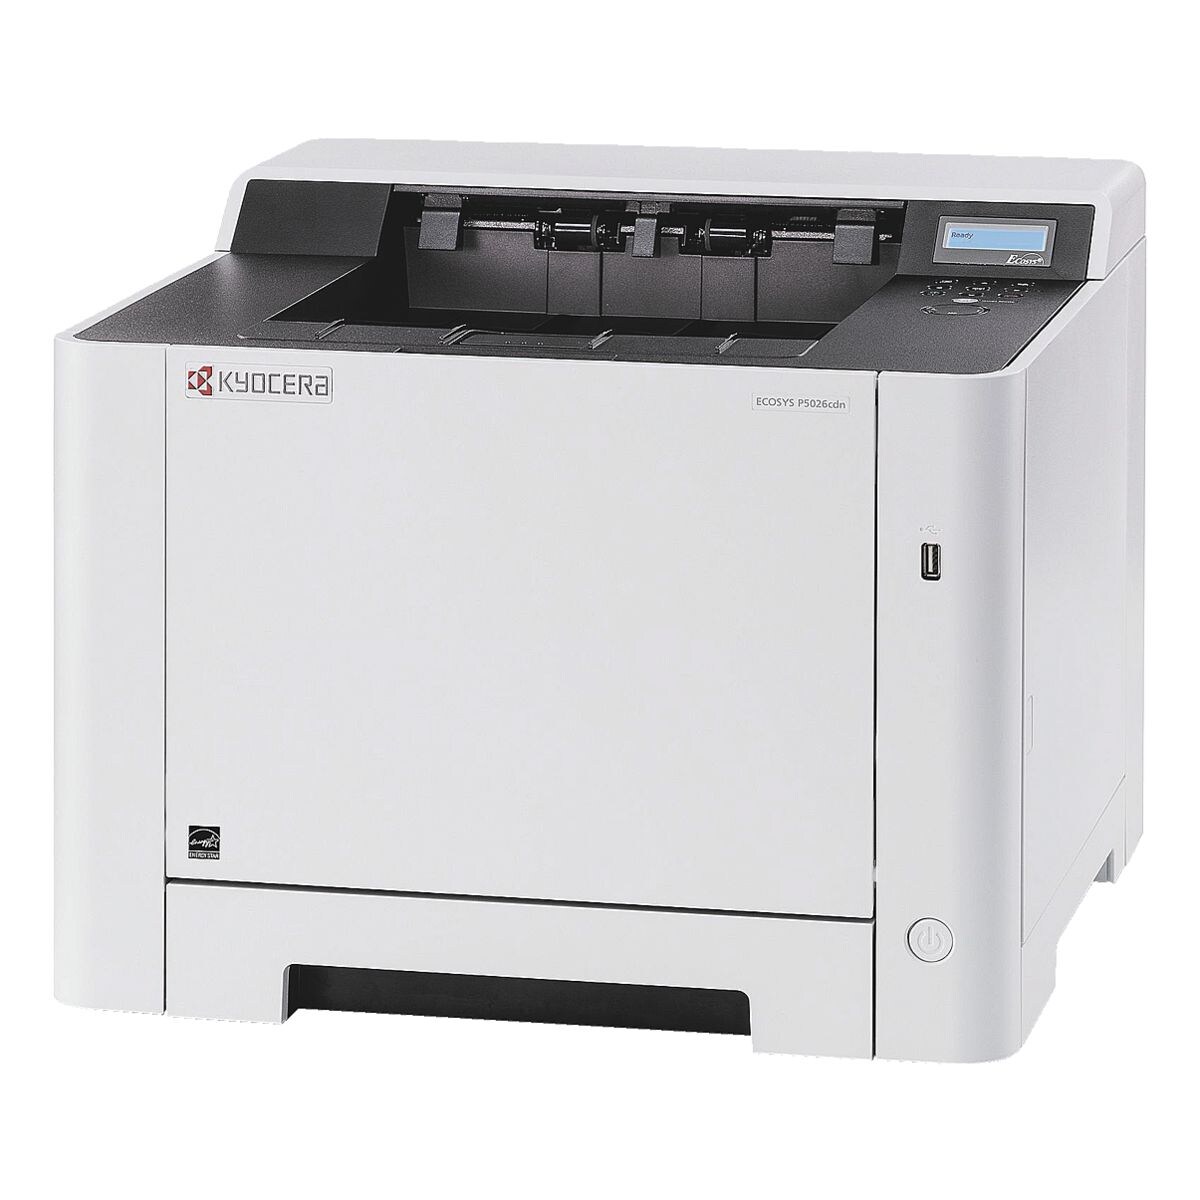 Kyocera P5026cdn Laserdrucker, A4 Farb-Laserdrucker, 1200 x 1200 dpi, mit LAN